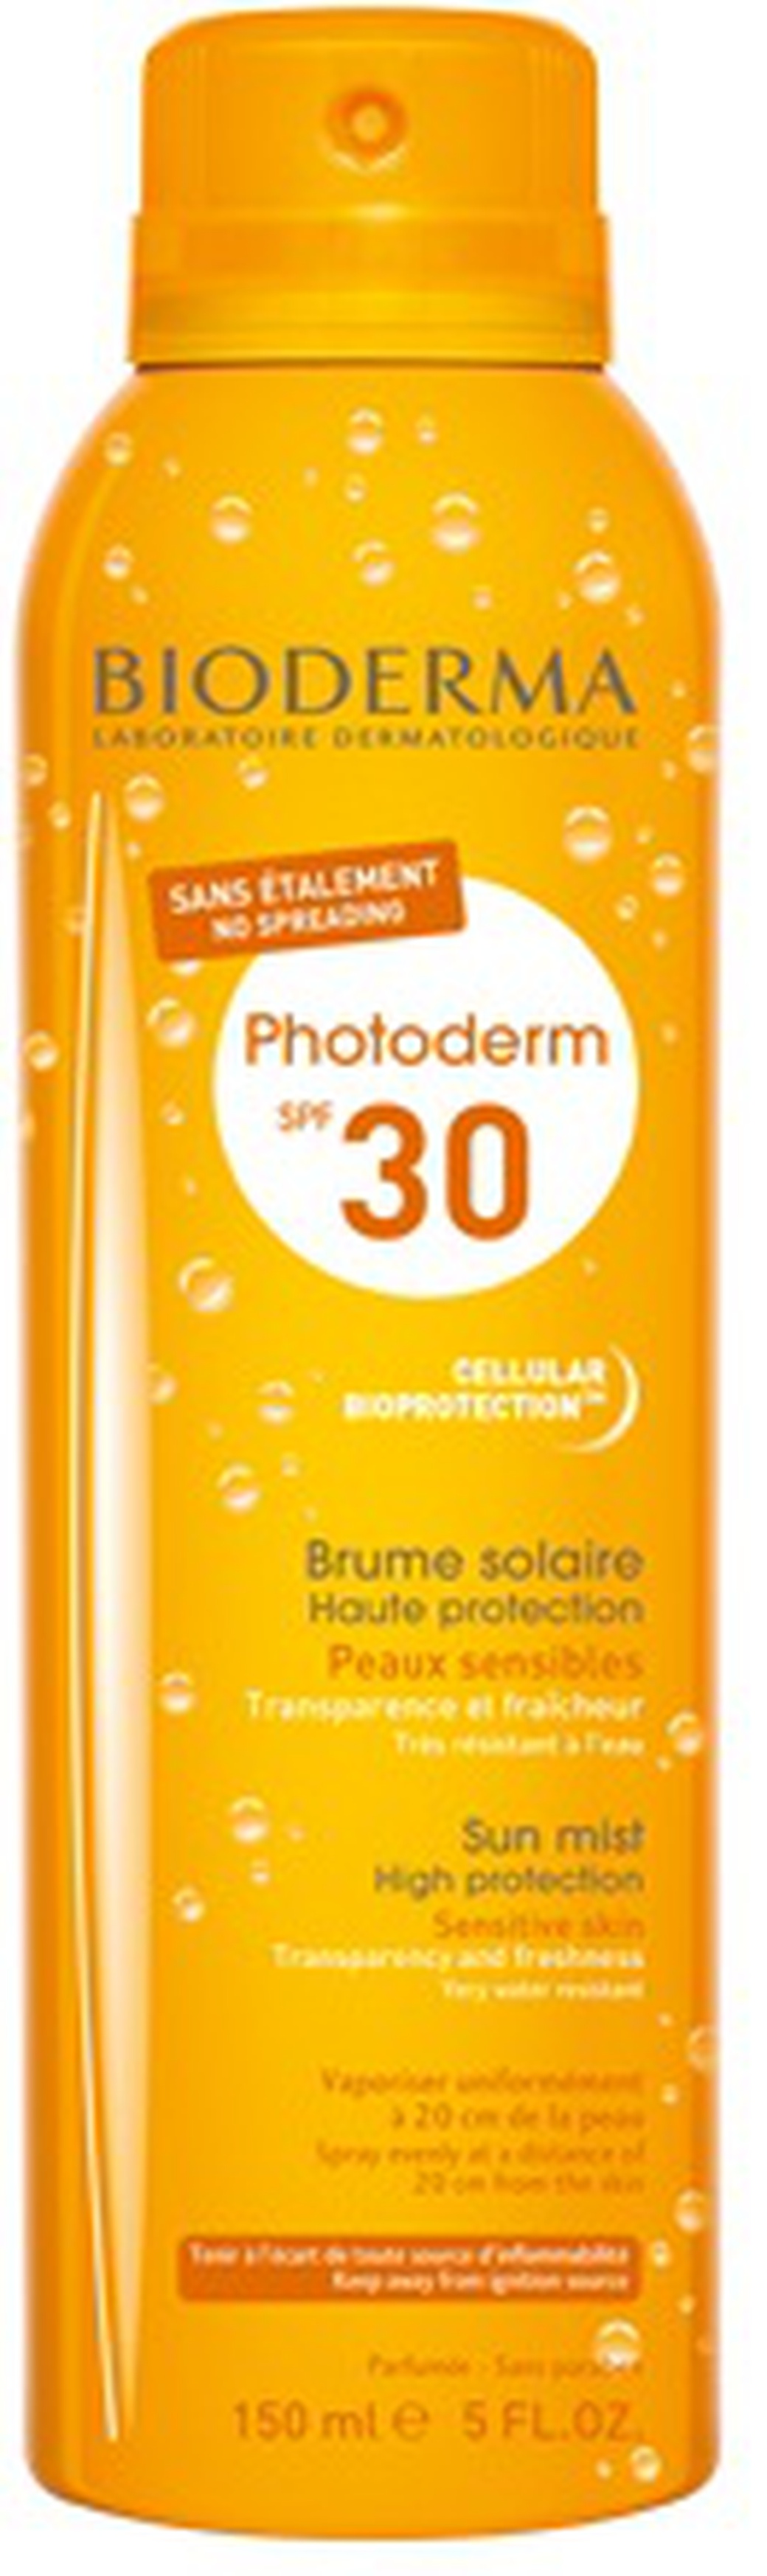 Bioderma Photoderm спрей-вуаль spf30 150 мл фото